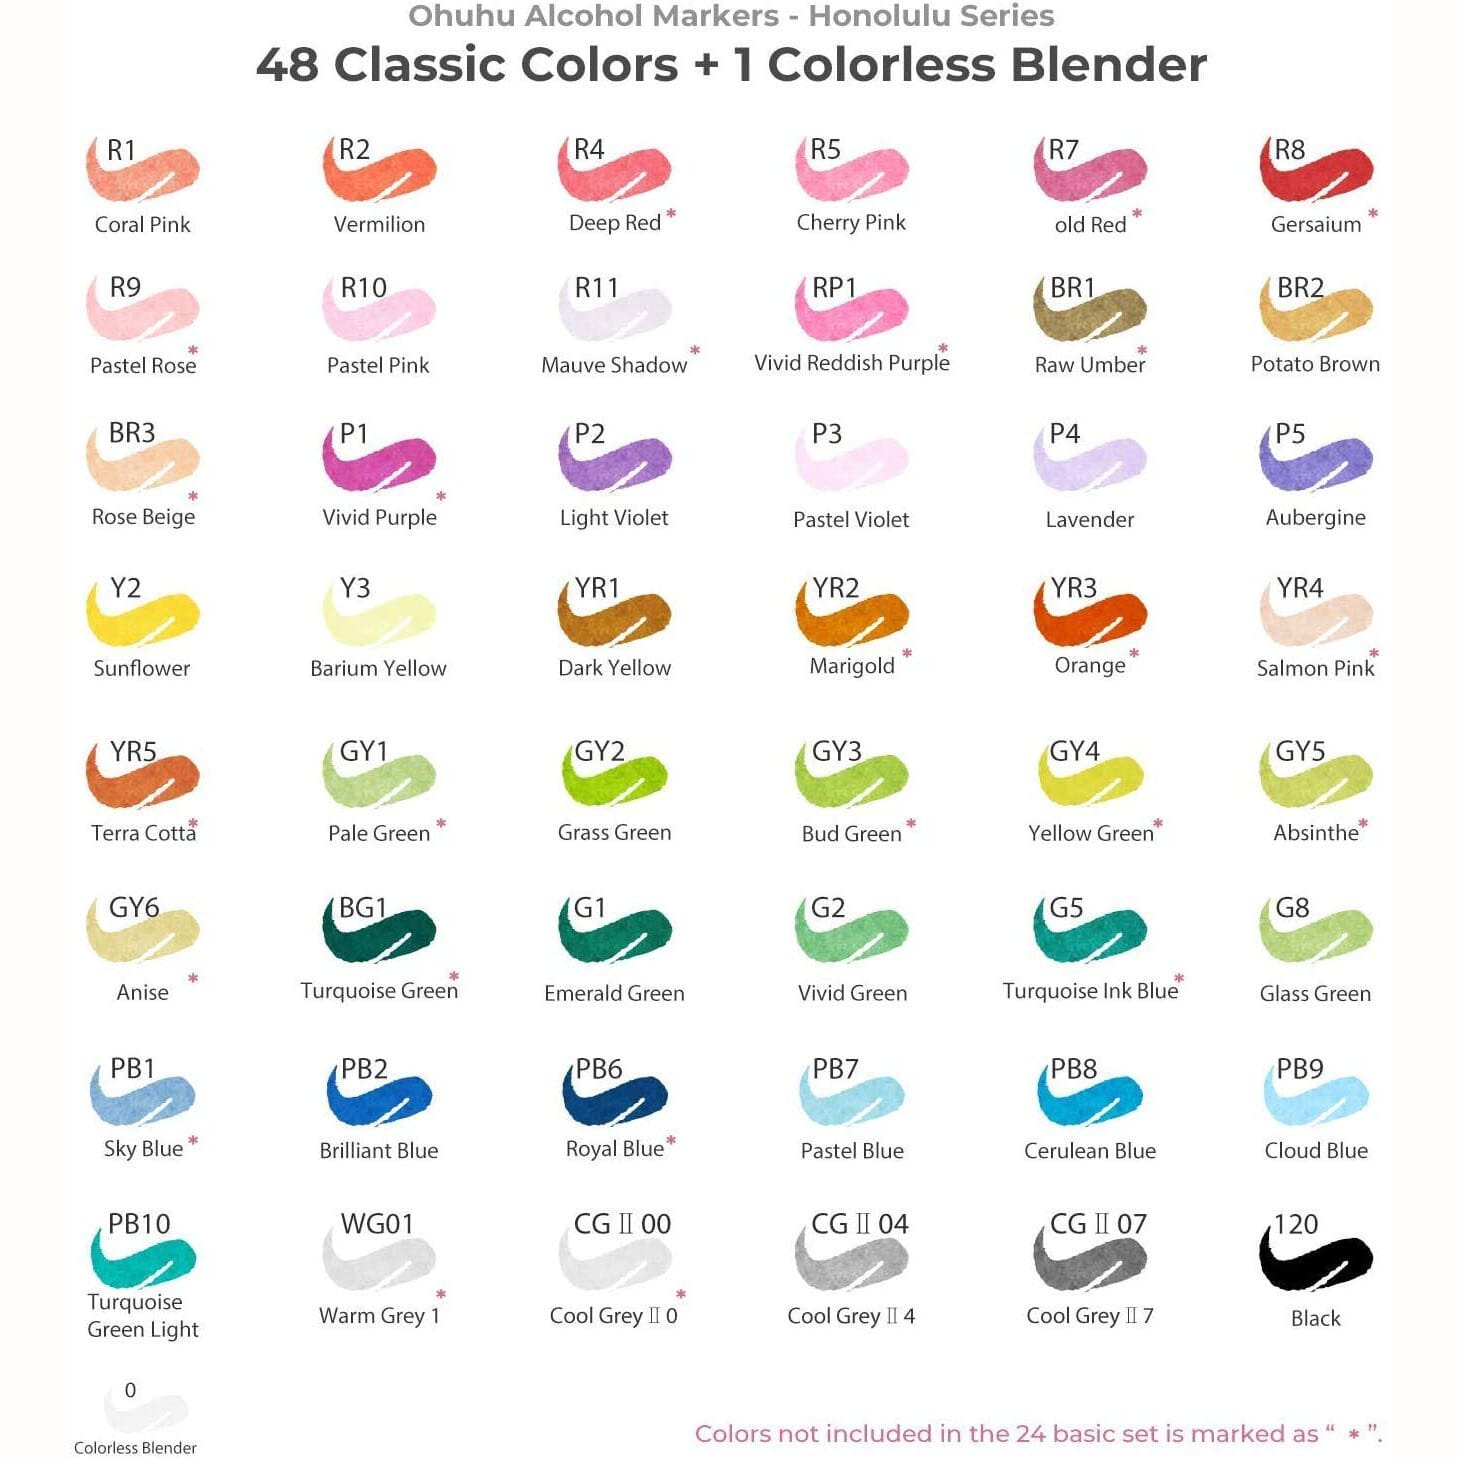 Ohuhu honolulu (New Packing) Set de 48 marcadores de alcohol en colores básicos + blender, punta brush y biselada OHUHU